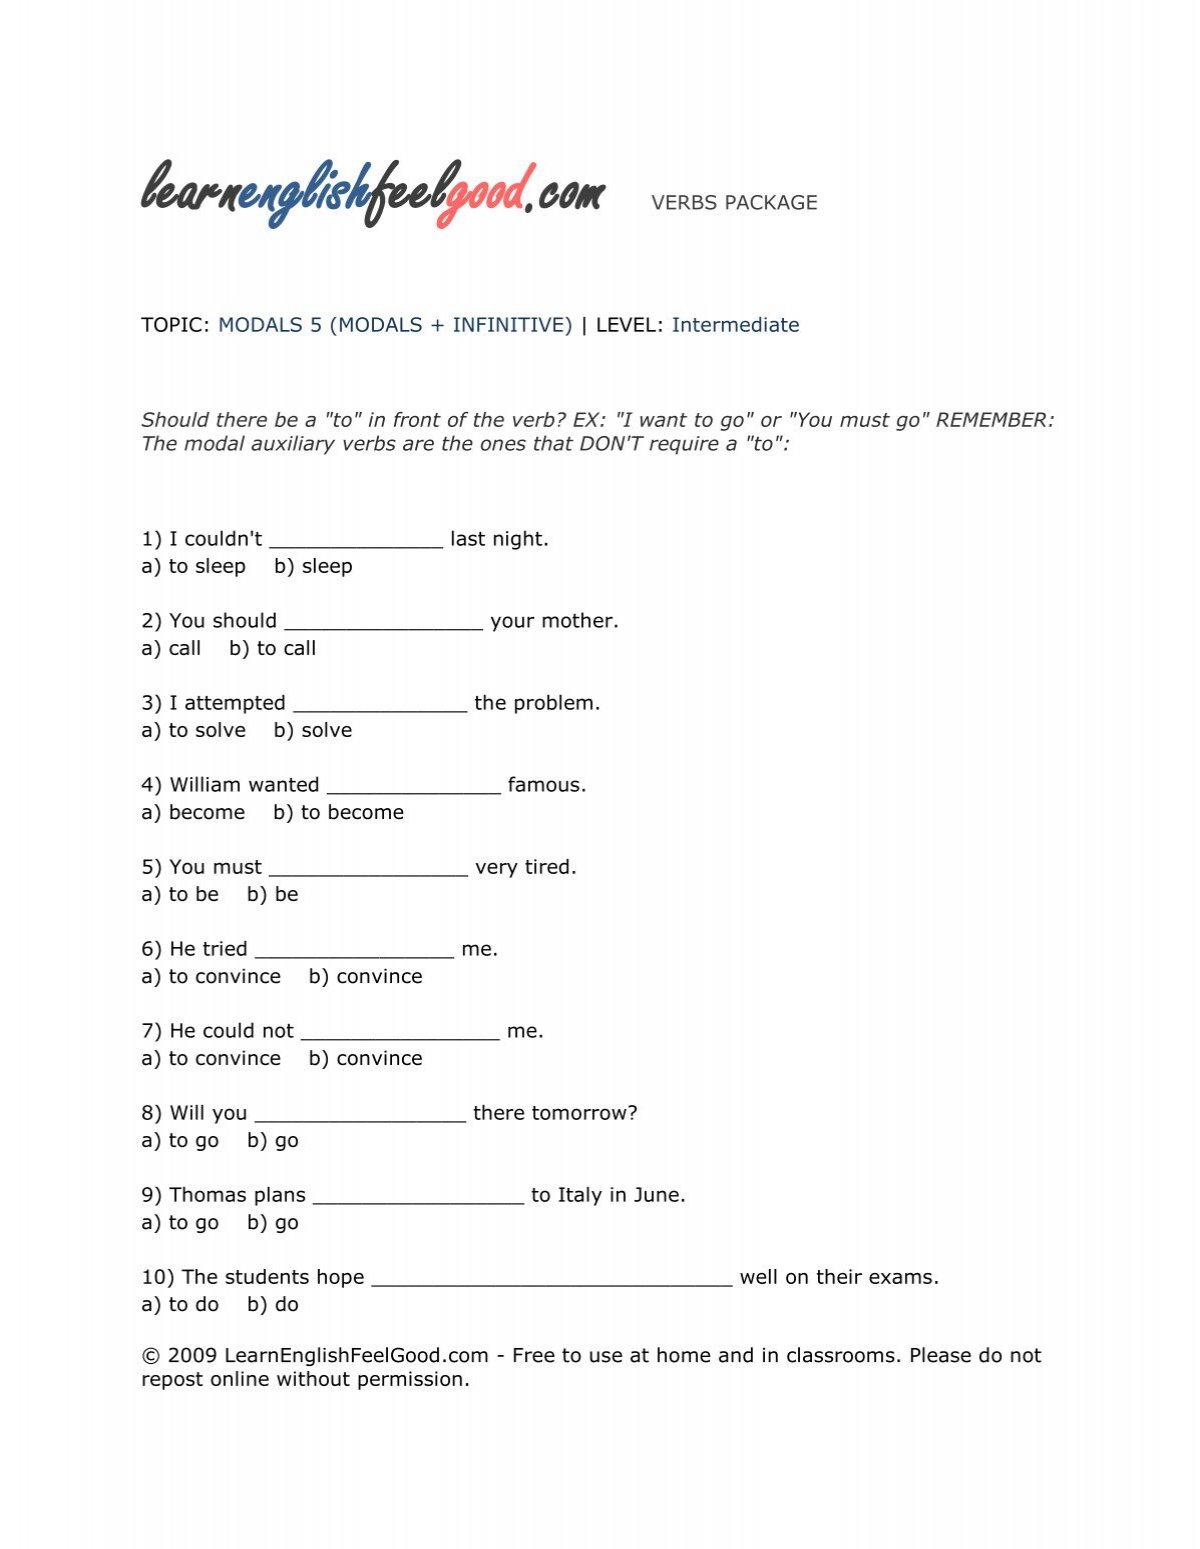 sample-worksheet-learnenglishfeelgood